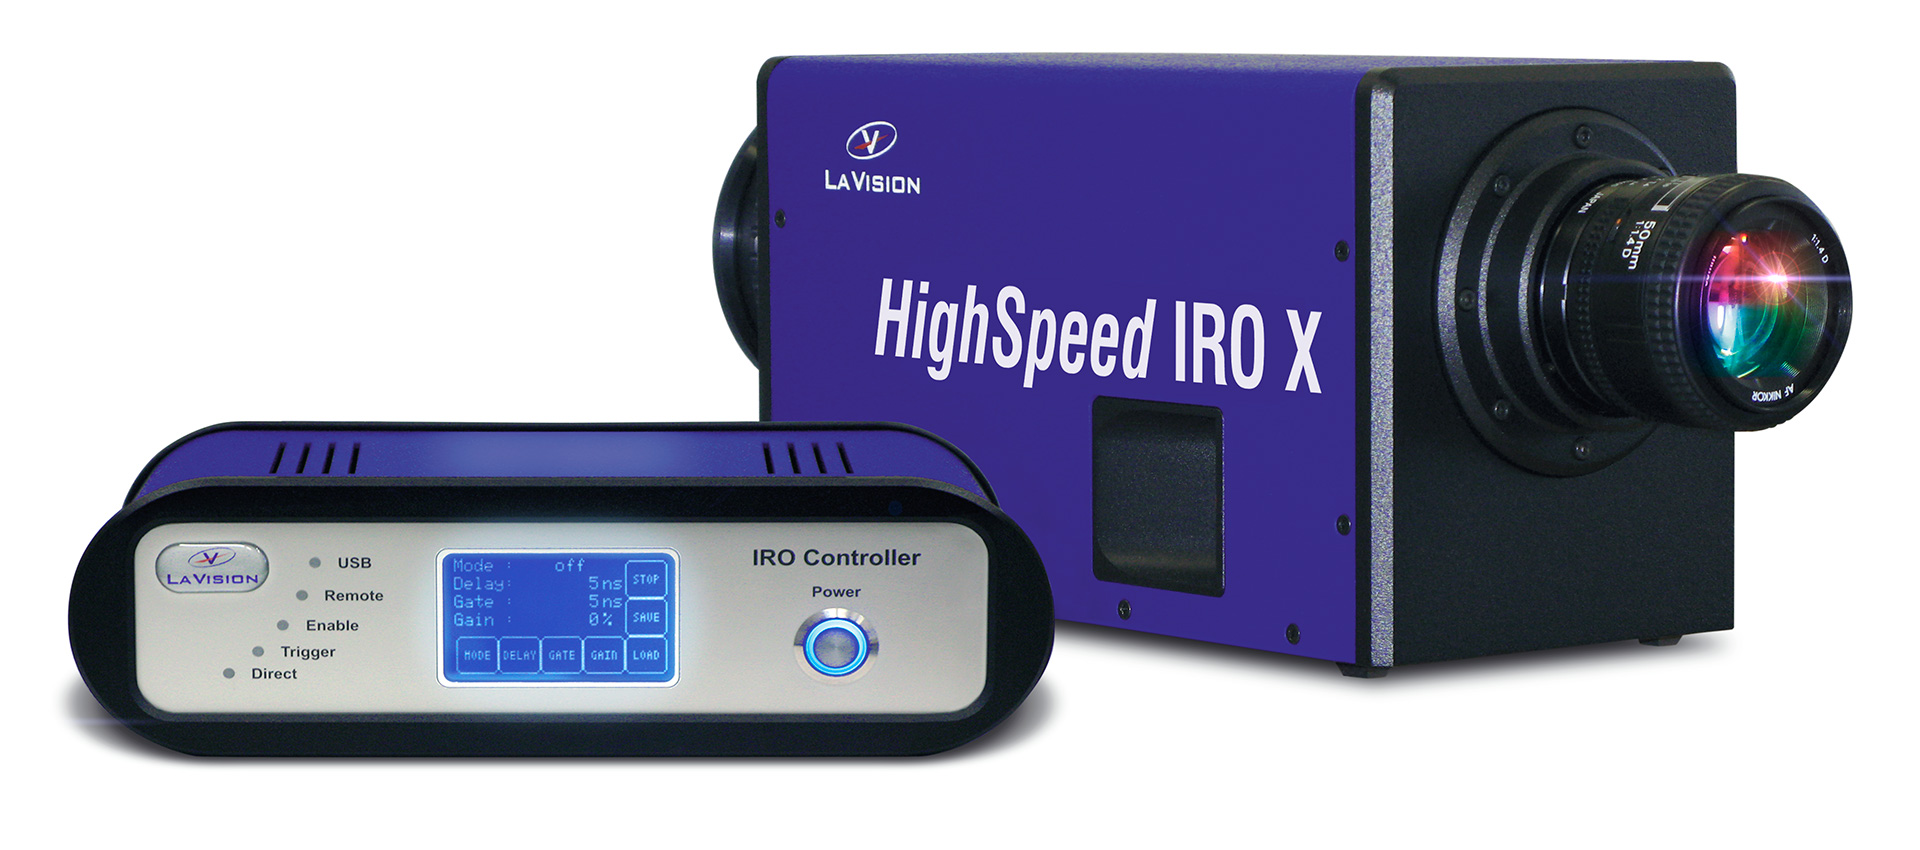 LaVision HighSpeed IRO X image intensifier and IRO Controller.